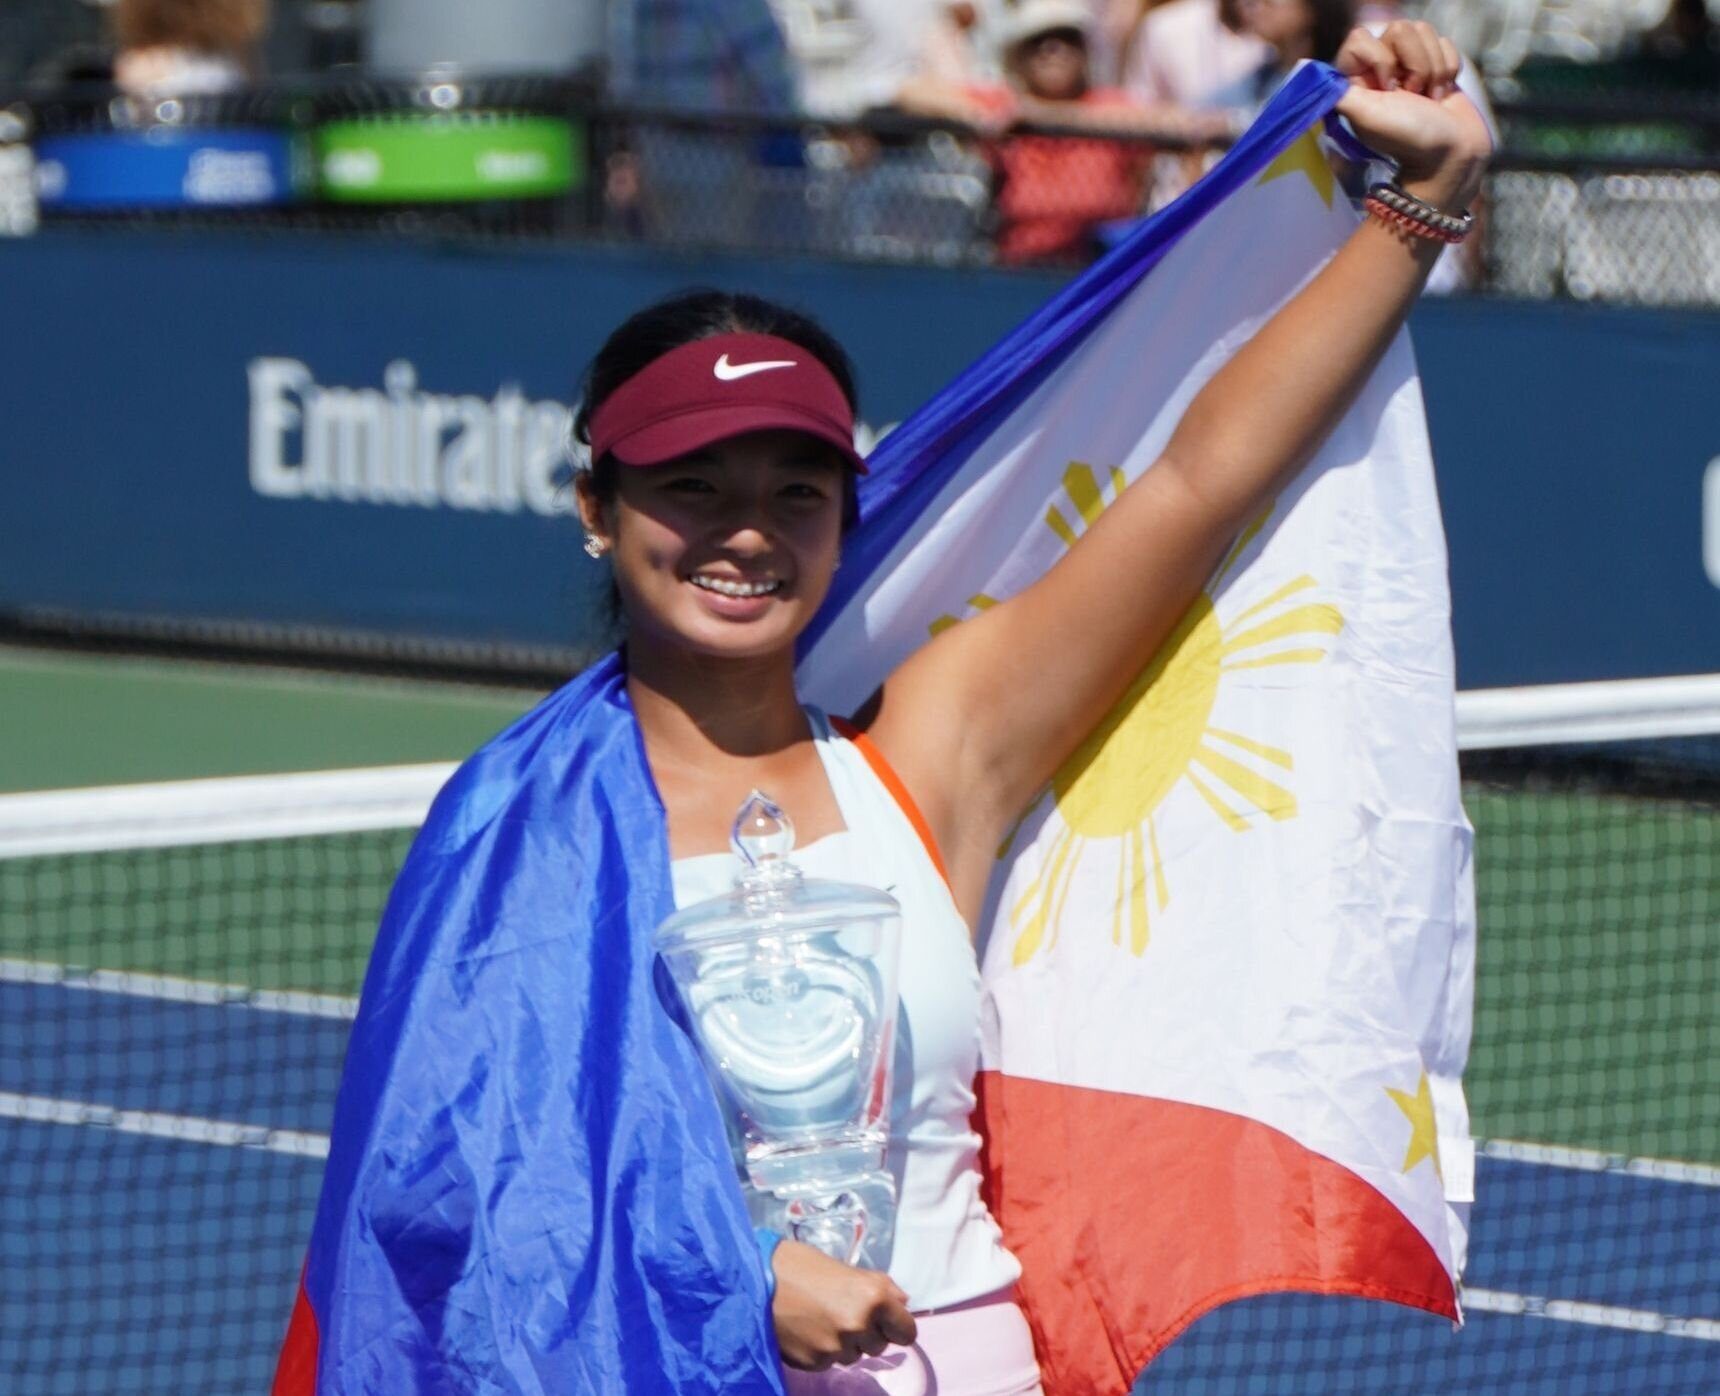 alex-eala-soars-in-world-ranking-hits-new-ph-tennis-milestone